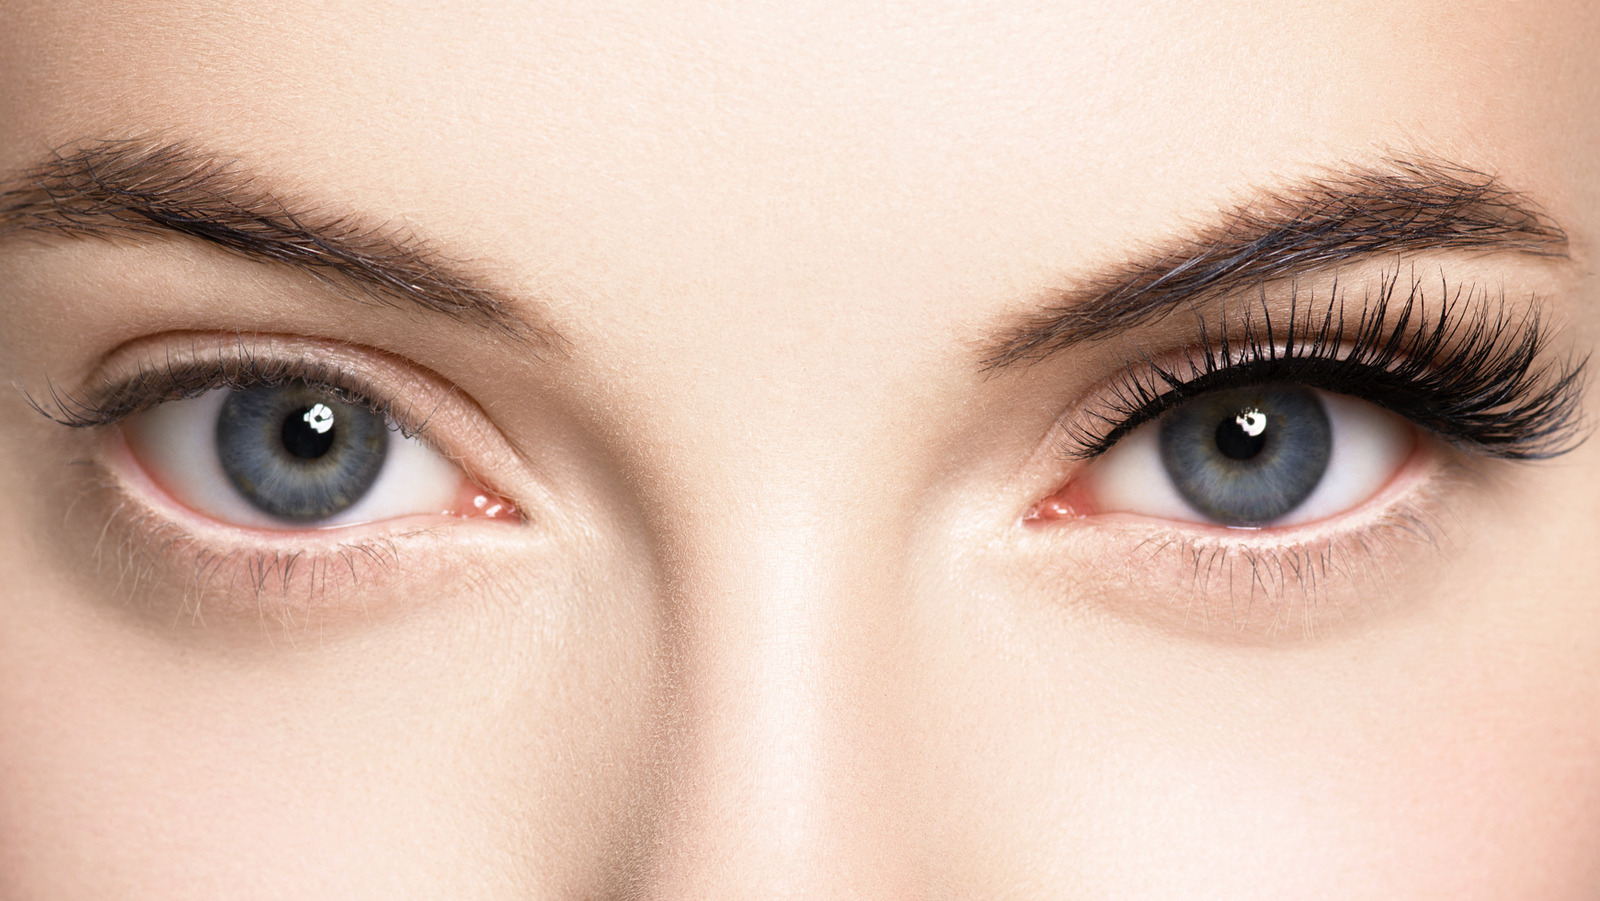 The At-Home Eyelash Extensions